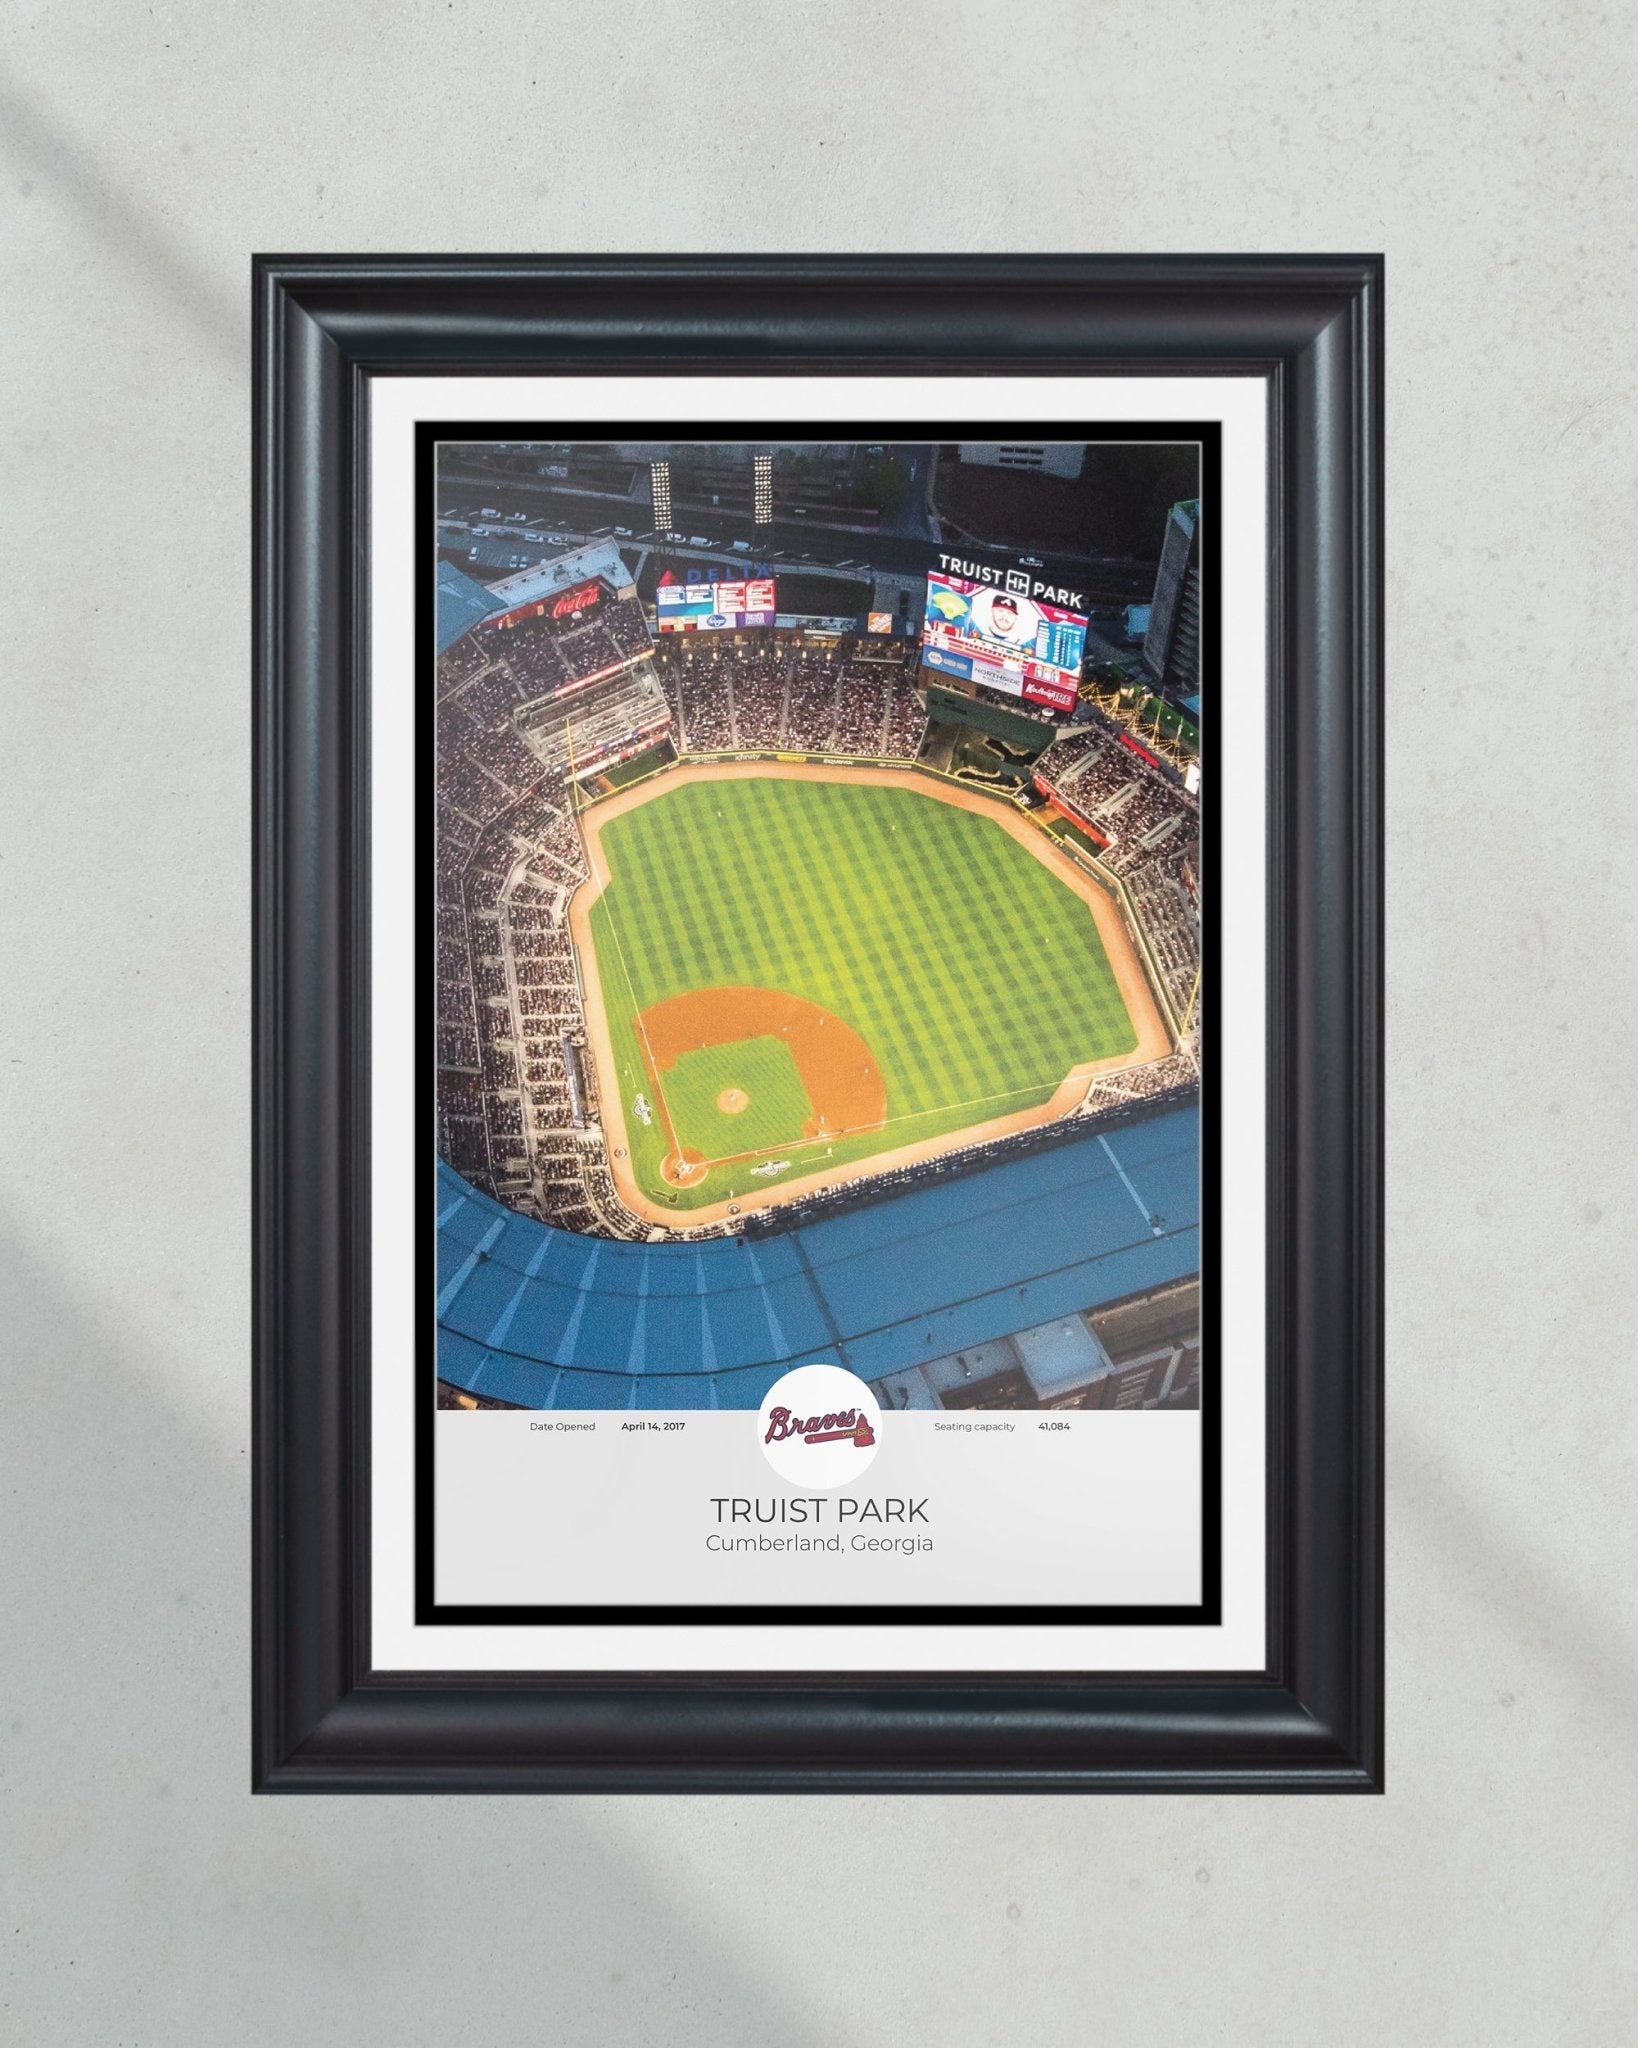 Shop Truist Park Stadium Framed Baseball Newspaper Headlines, Prints,  Covers, Photos. – Title Game Frames